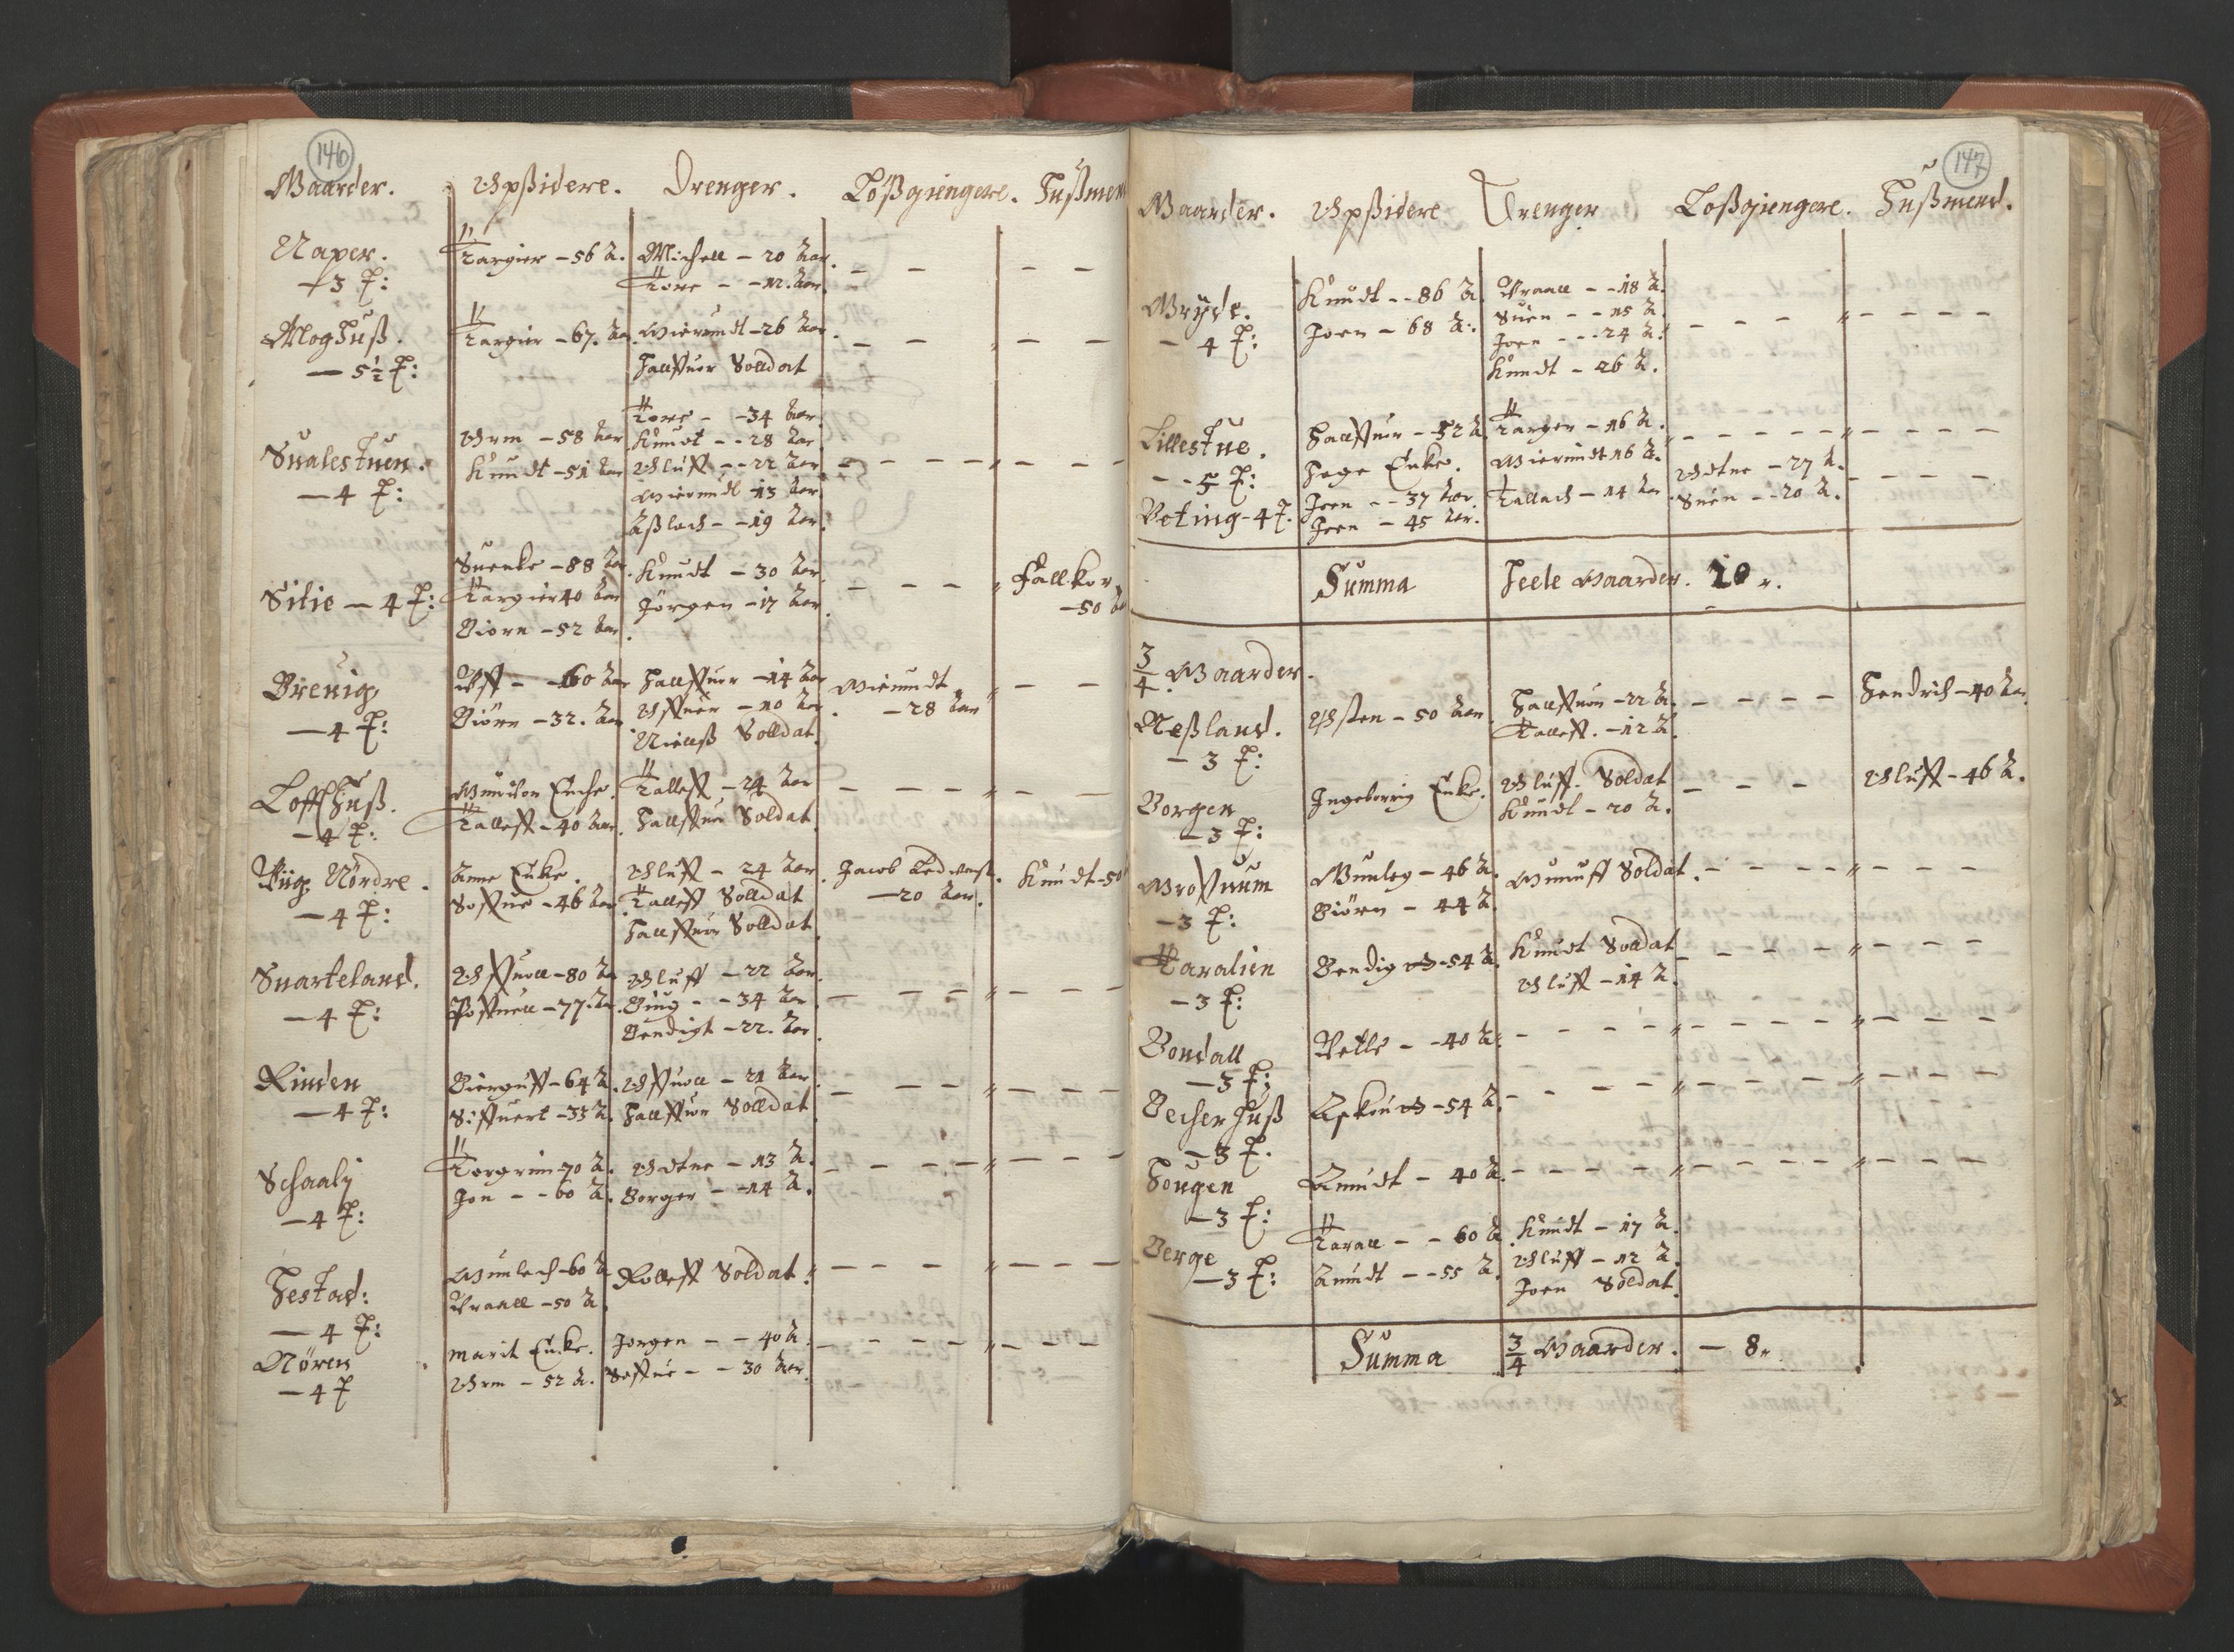 RA, Vicar's Census 1664-1666, no. 12: Øvre Telemark deanery, Nedre Telemark deanery and Bamble deanery, 1664-1666, p. 146-147